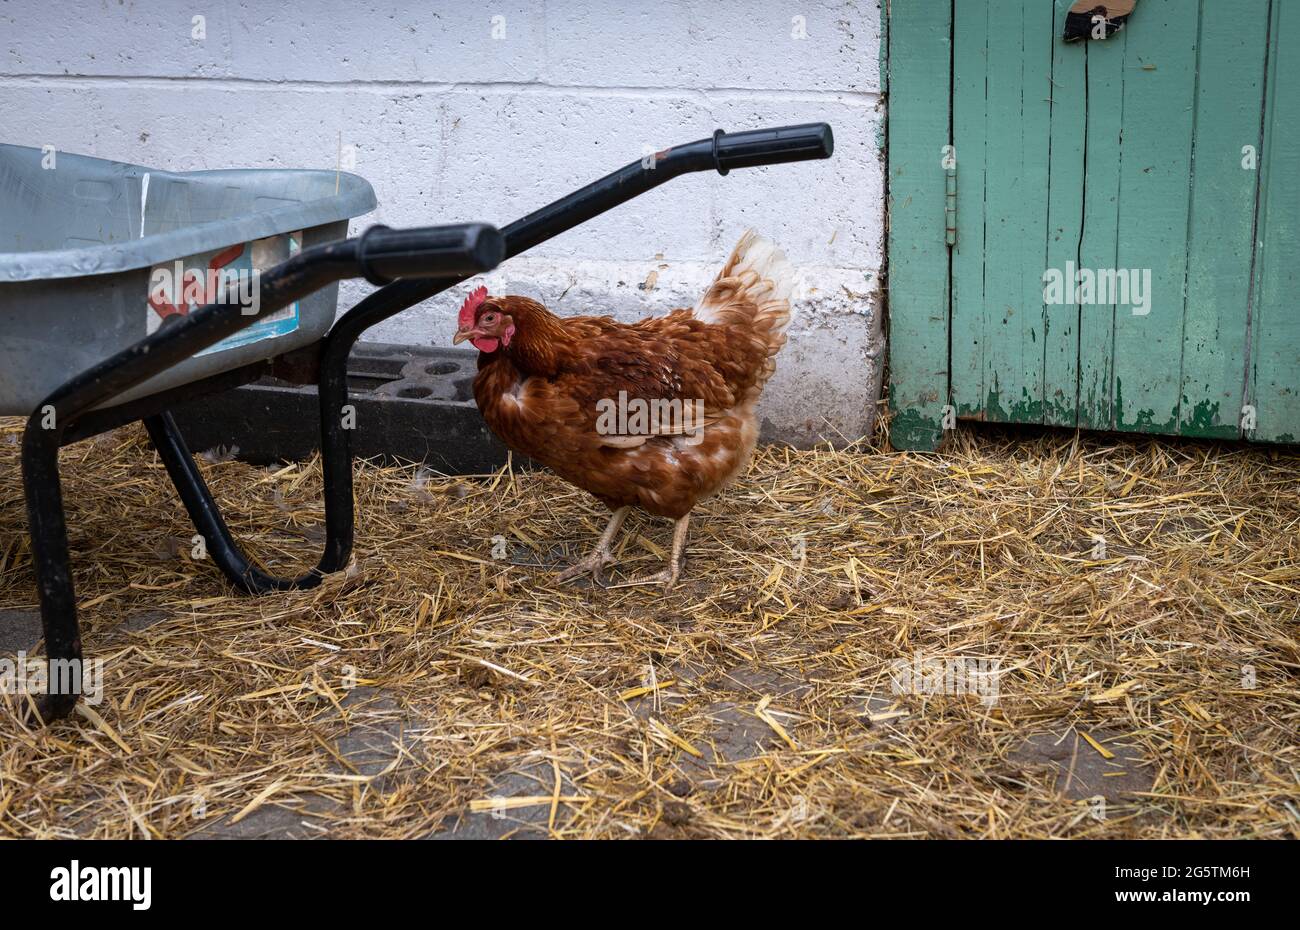 A freerange chicken in a farmyard. Stock Photo